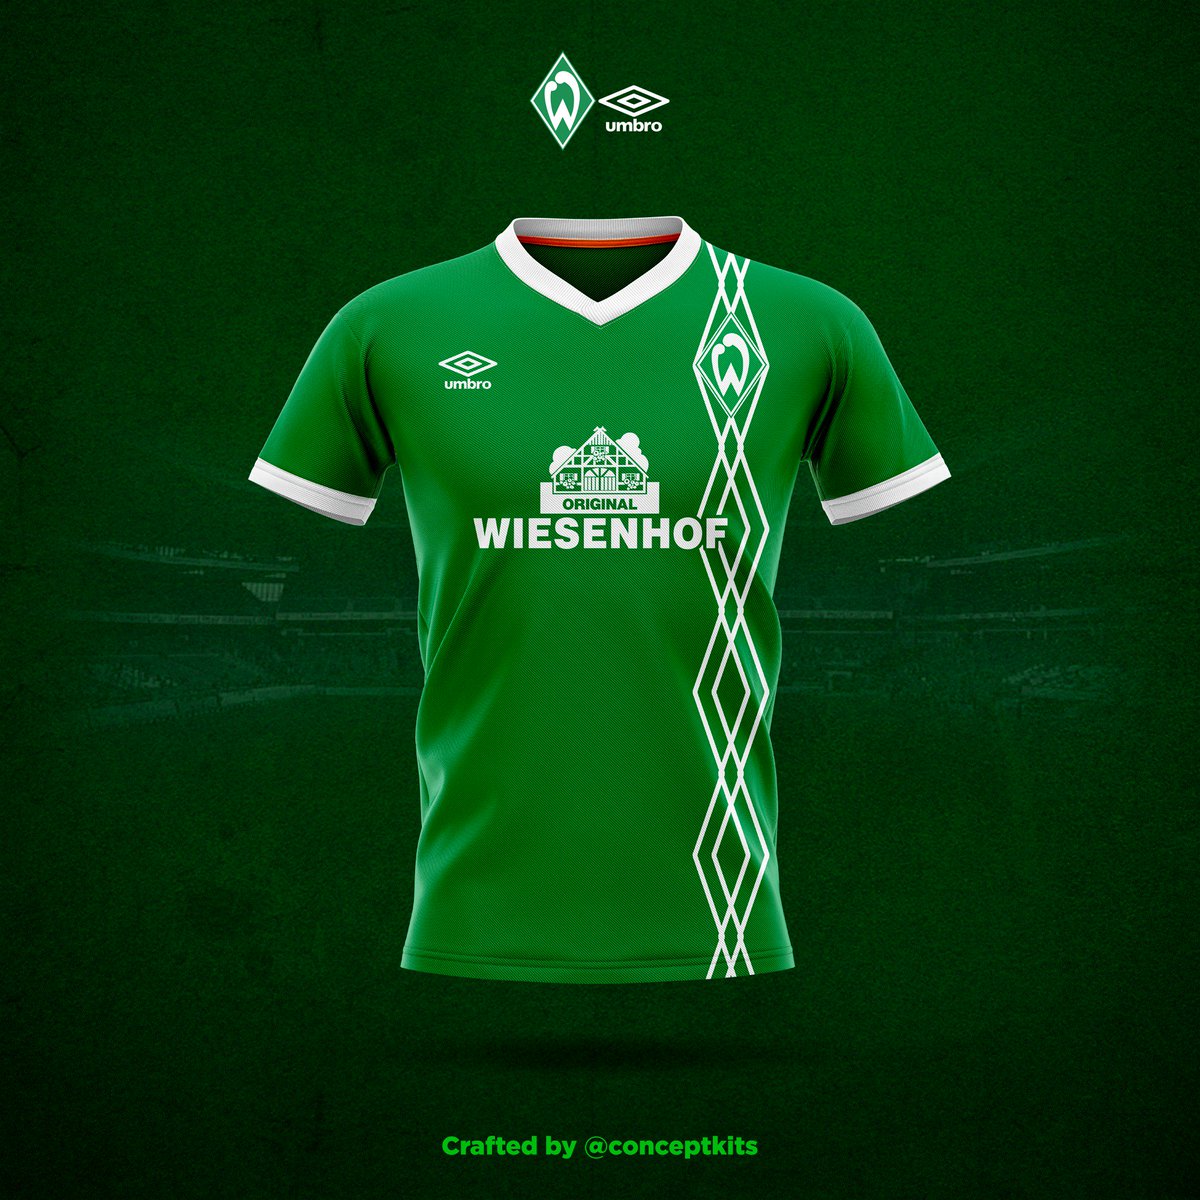 Concept Kits On Twitter Sportverein Werder Bremen Home And Away Kit Concepts 2019 20 Werder Werderbremen Bremen Bundesliga Svwb Kitdesign Conceptkit Umbro Https T Co 3c1ok6klpu